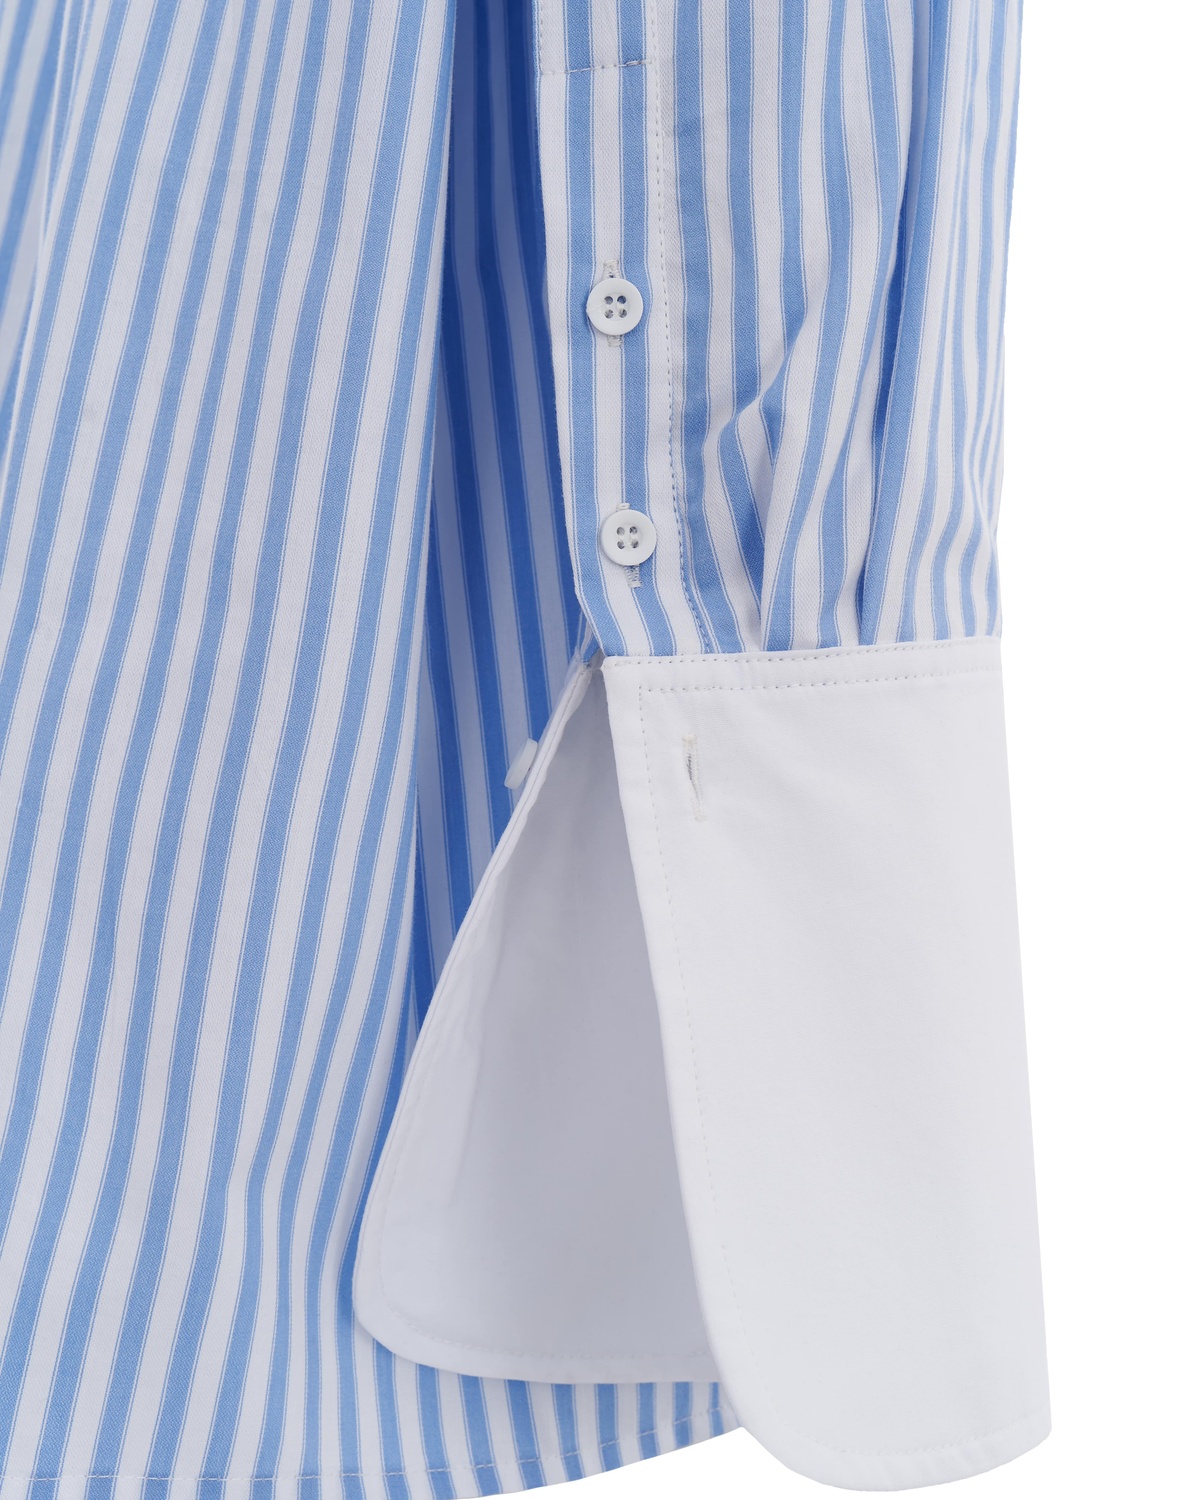 Striped Shirt with White Cuffs